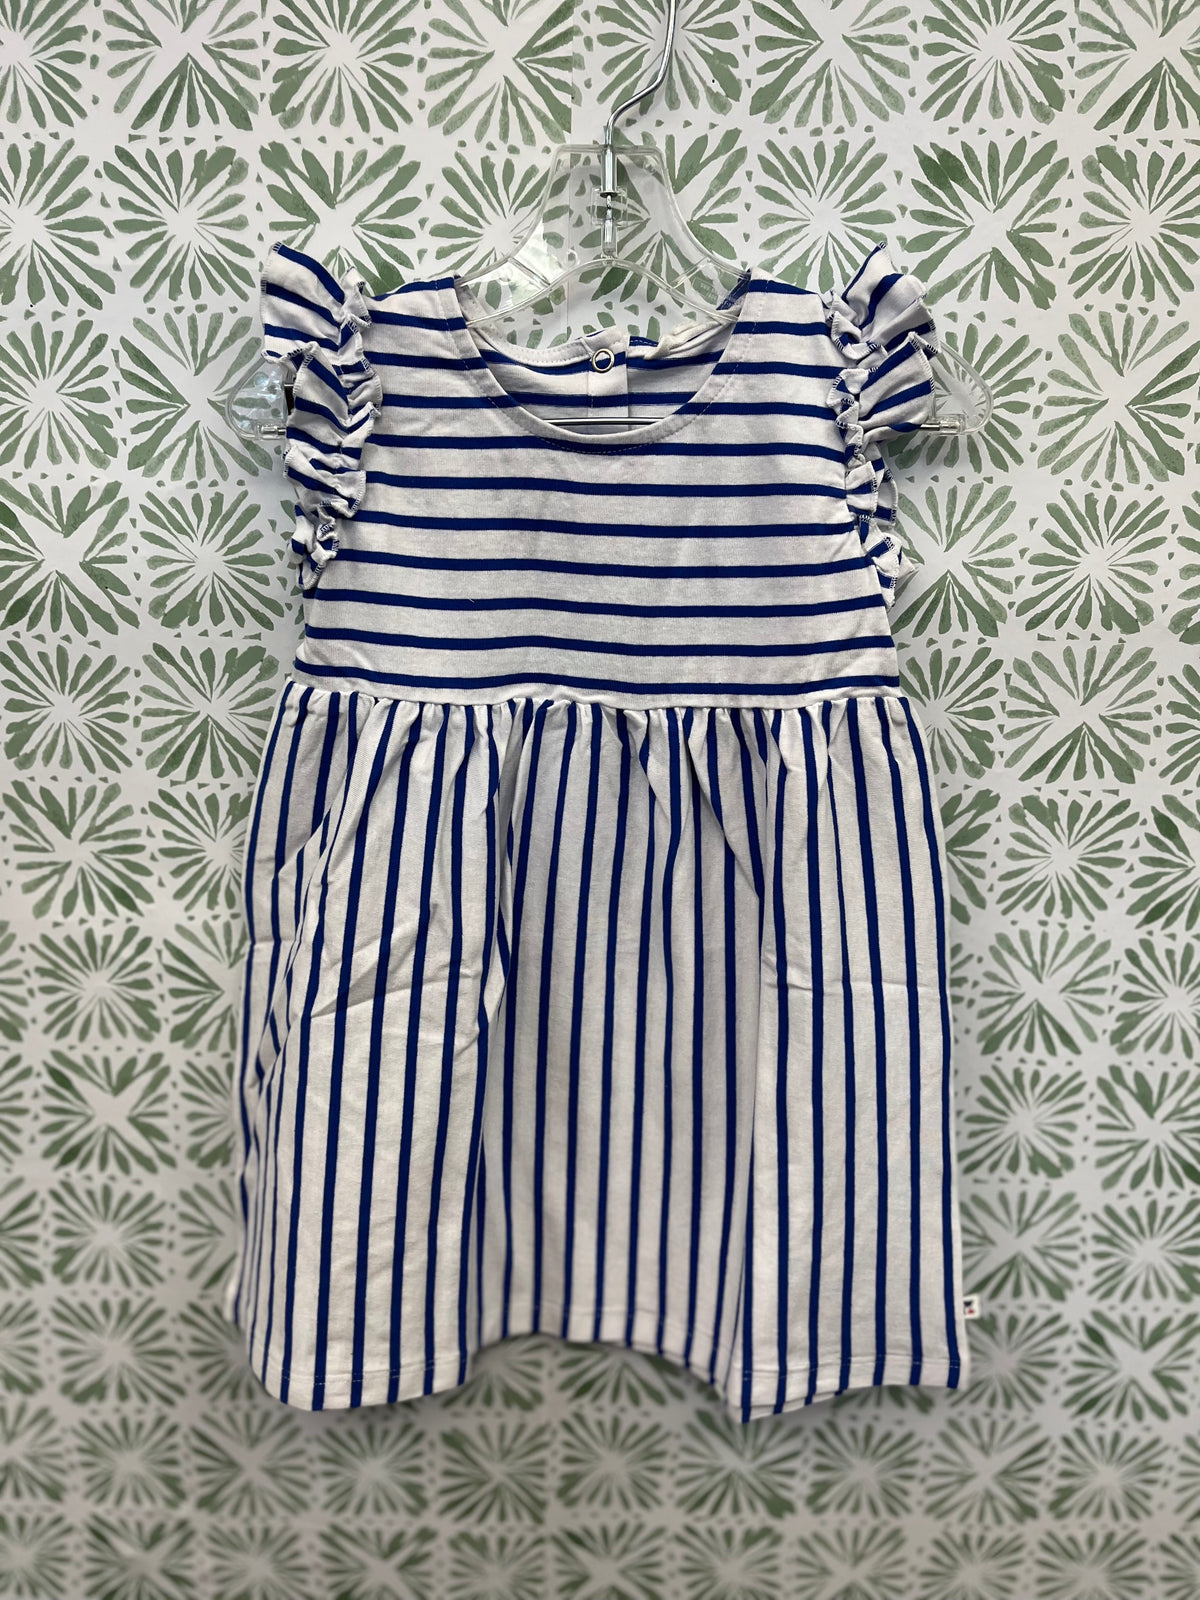 Batela Blue and White Nautical Striped Short Sleeve Dress with Ruffle Cap Sleeve